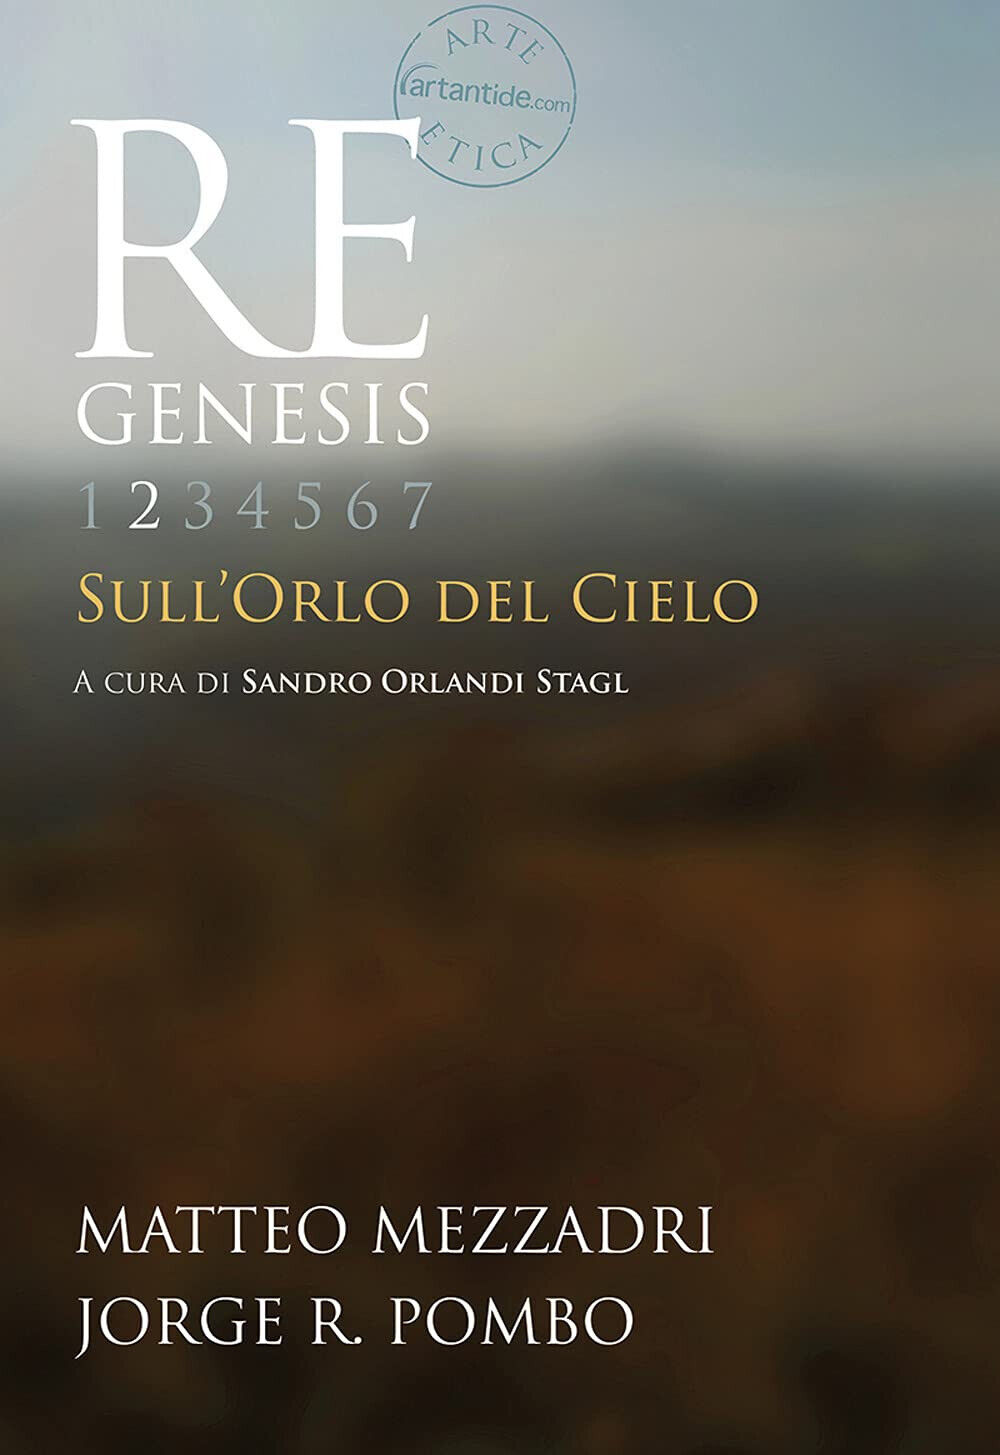 Re Genesis vol.2 - Matteo Mezzadri, Jorge R. Pombo - Vanillaedizioni, 2021